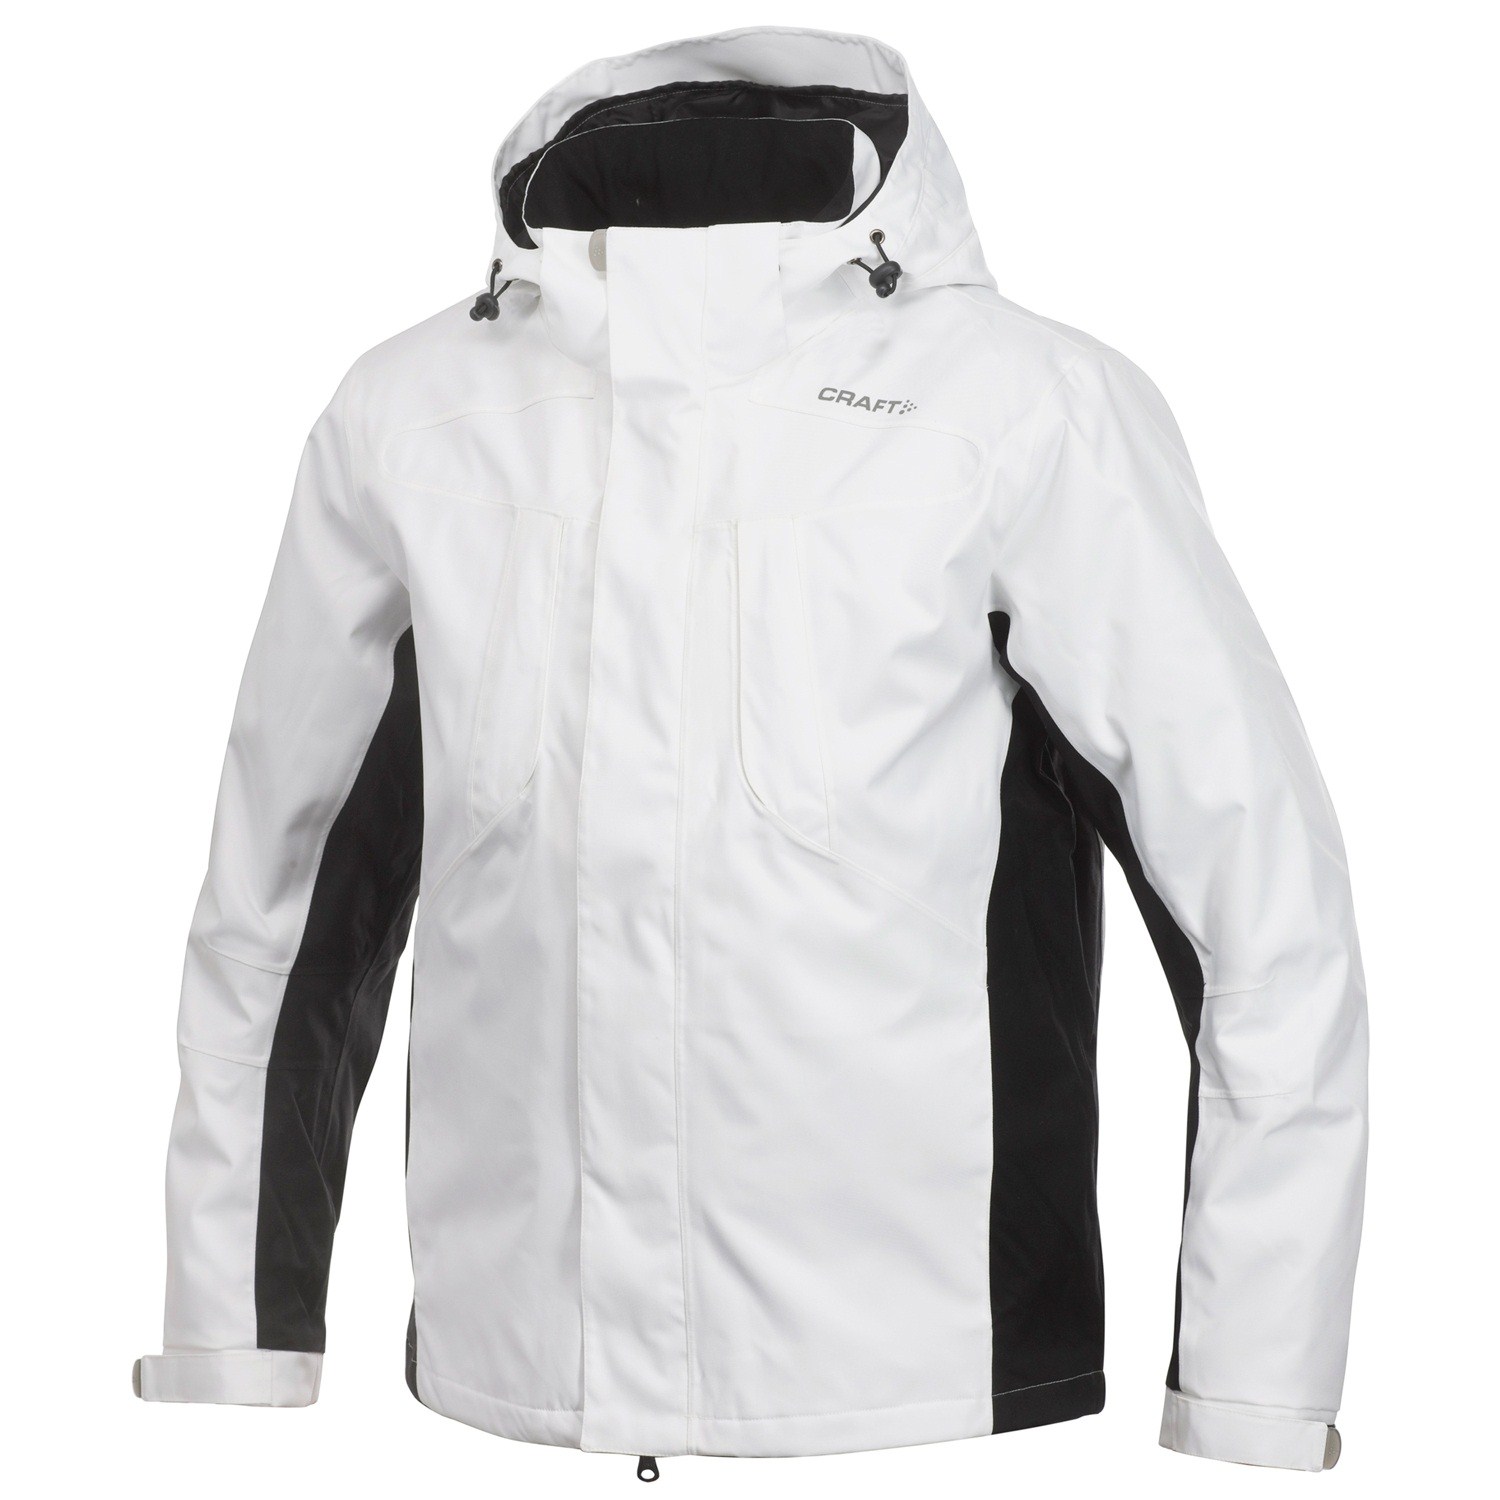 Craft Fahrenheit Jacket Men - Jackets/vests - Athletic apparel - Sport ...